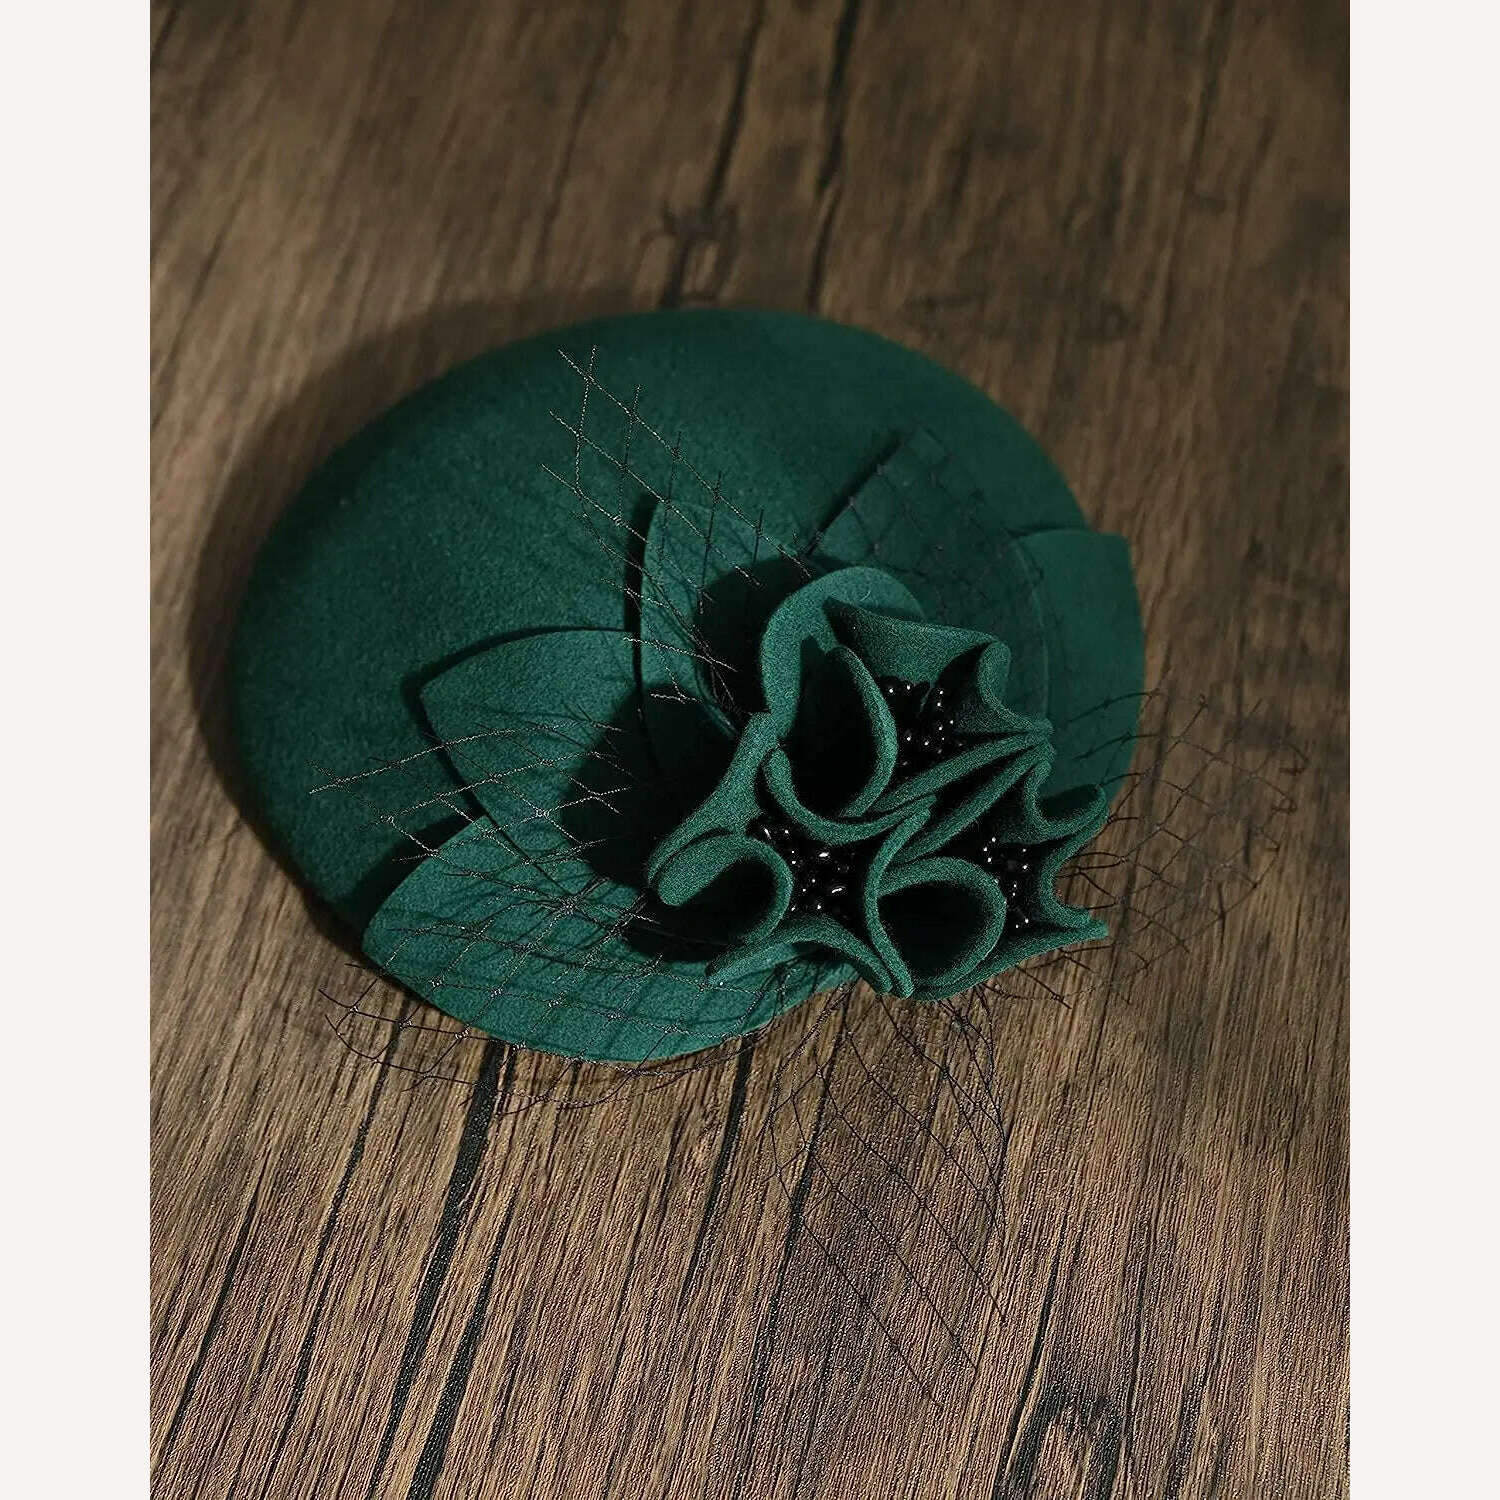 KIMLUD, Elegant Fascinator for Women Wool Felt Pillbox Hat Kentucky Race Church Headdress Tea Party Hats Vintage Veil Cocktail Fedoras, Green, KIMLUD Womens Clothes